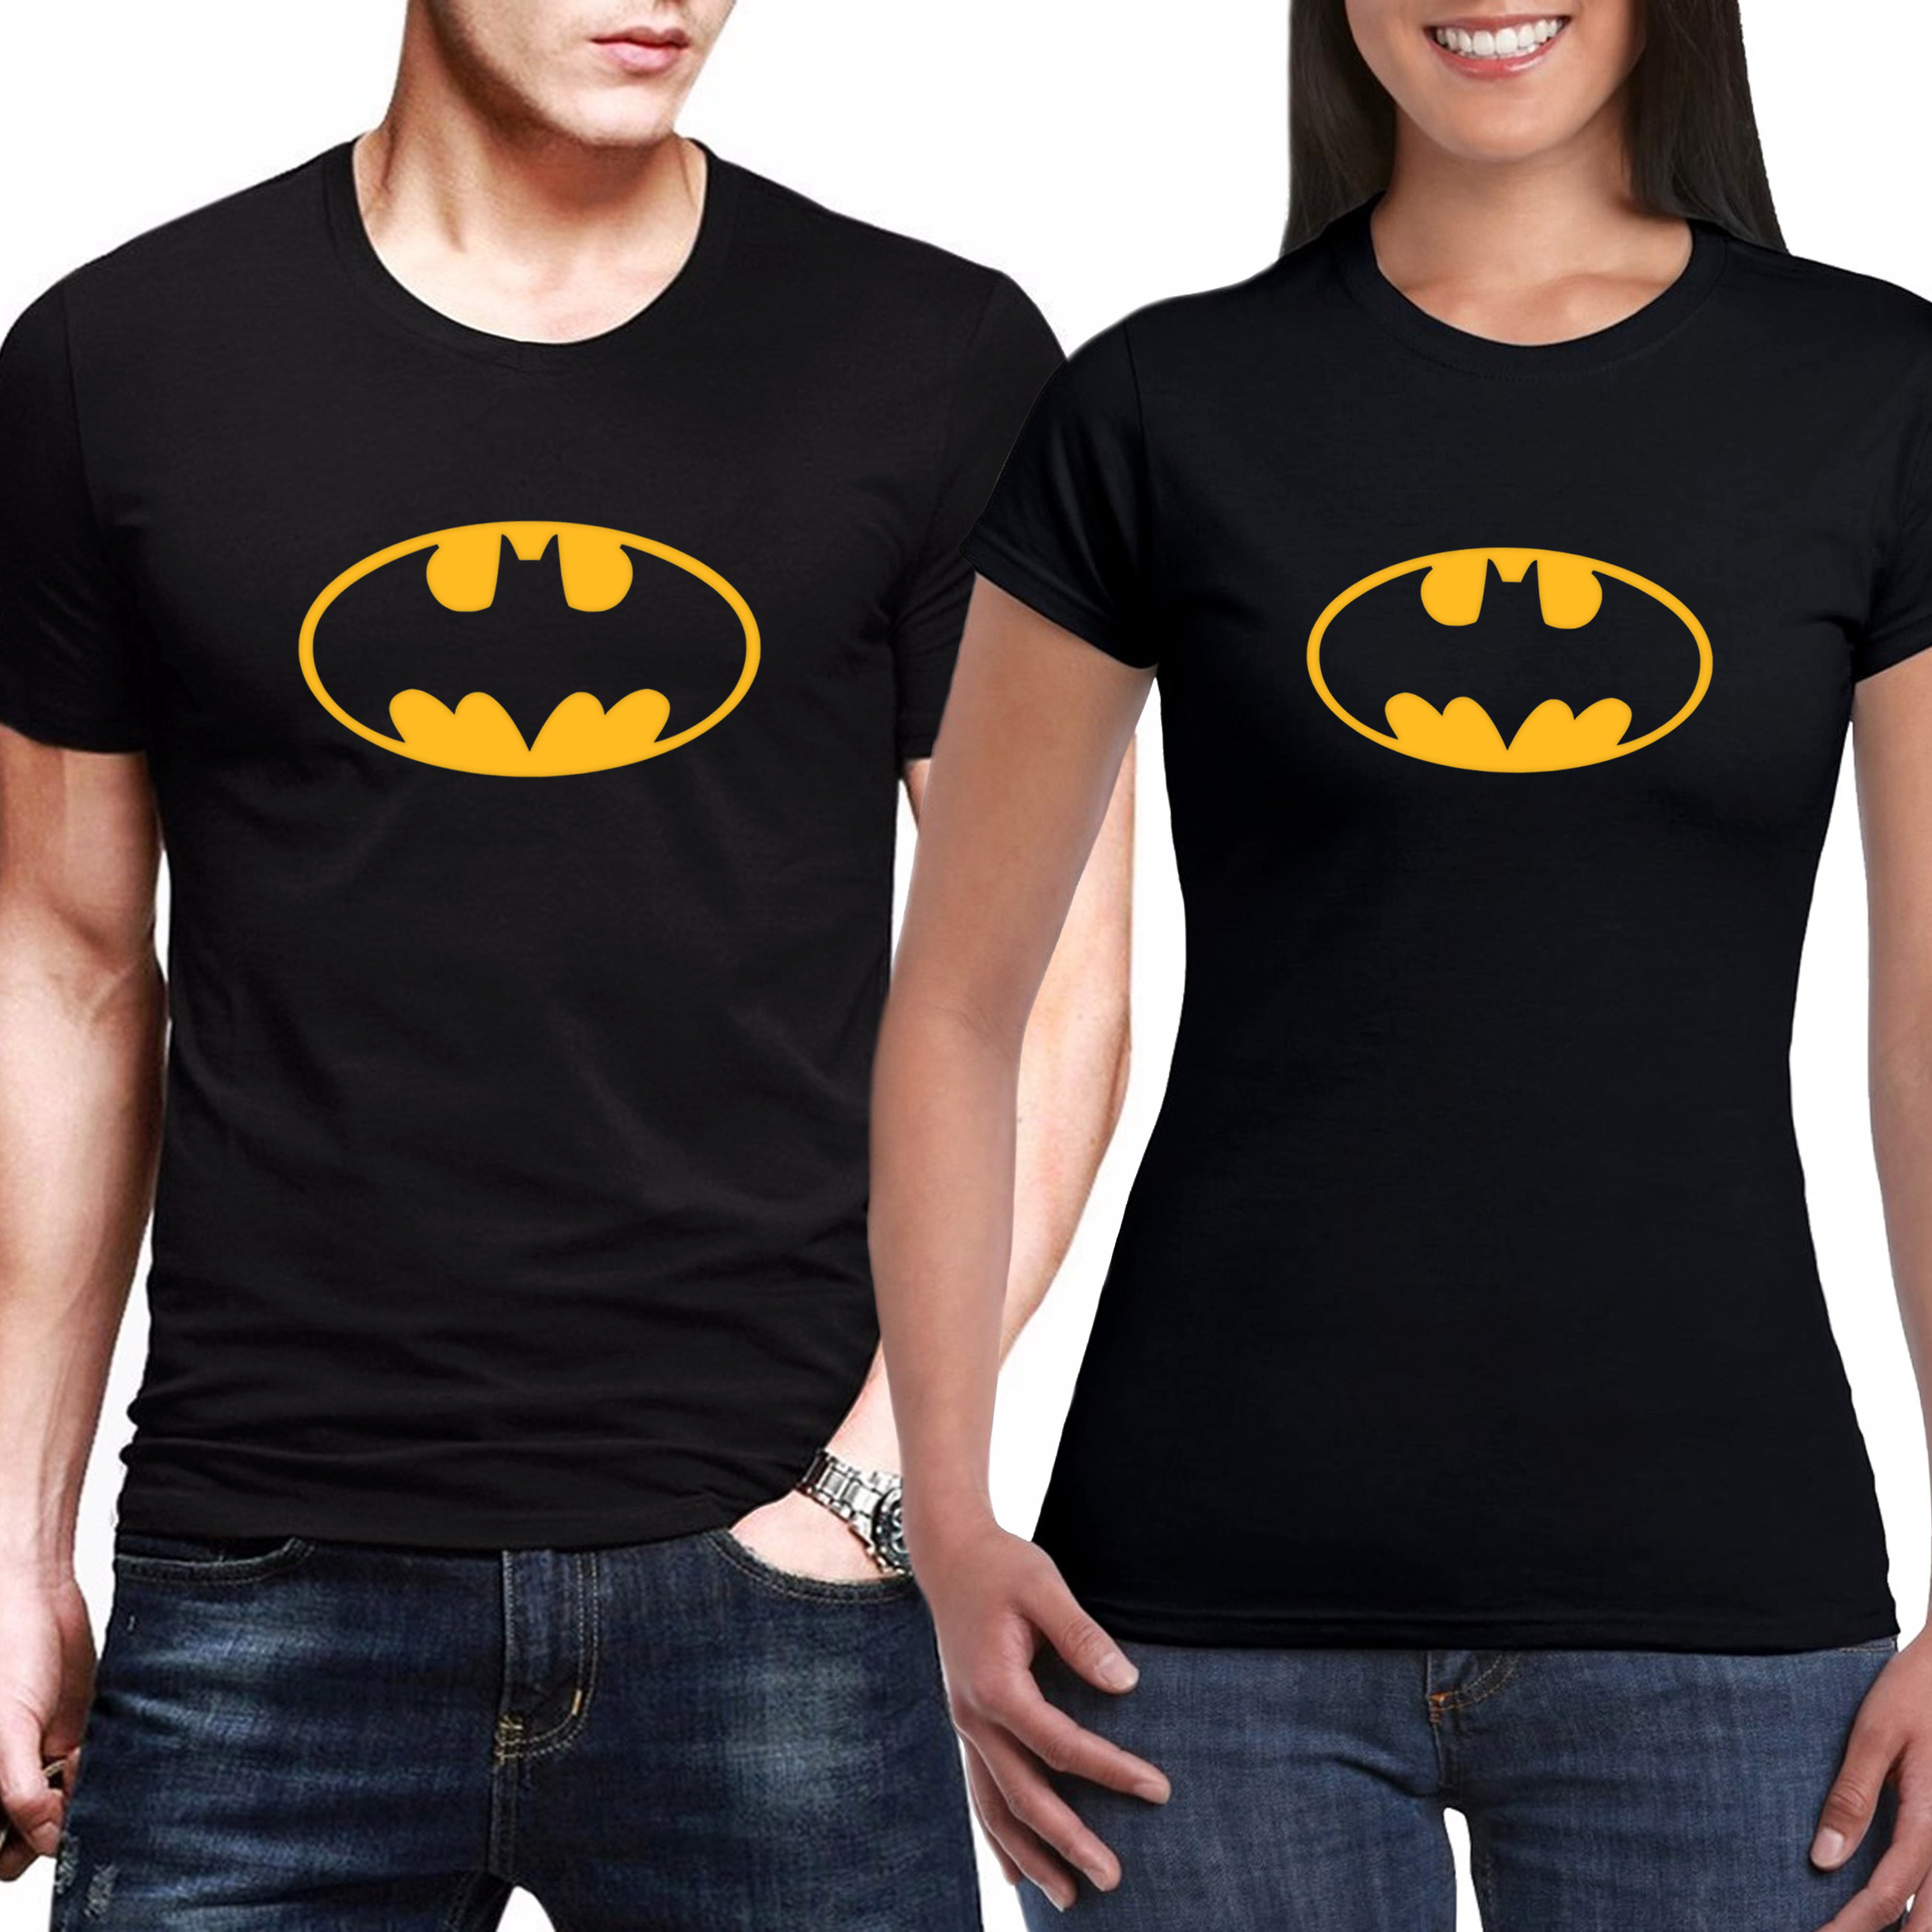 Patria Peatonal Monet Par de Camisetas Batman para Pareja